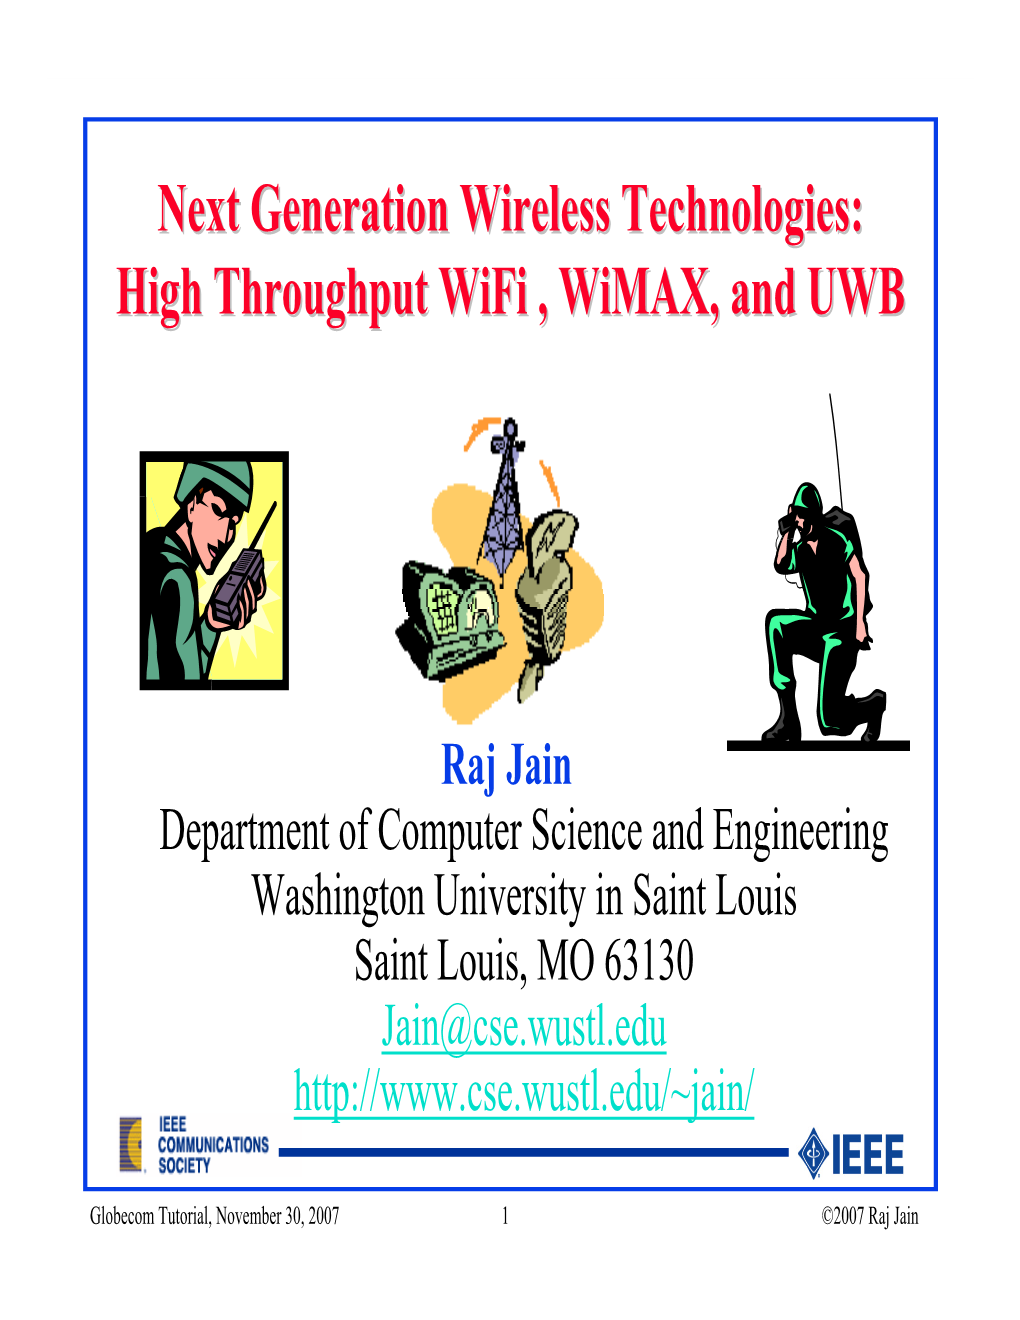 Next Generation Wireless Technologies: High Throughput